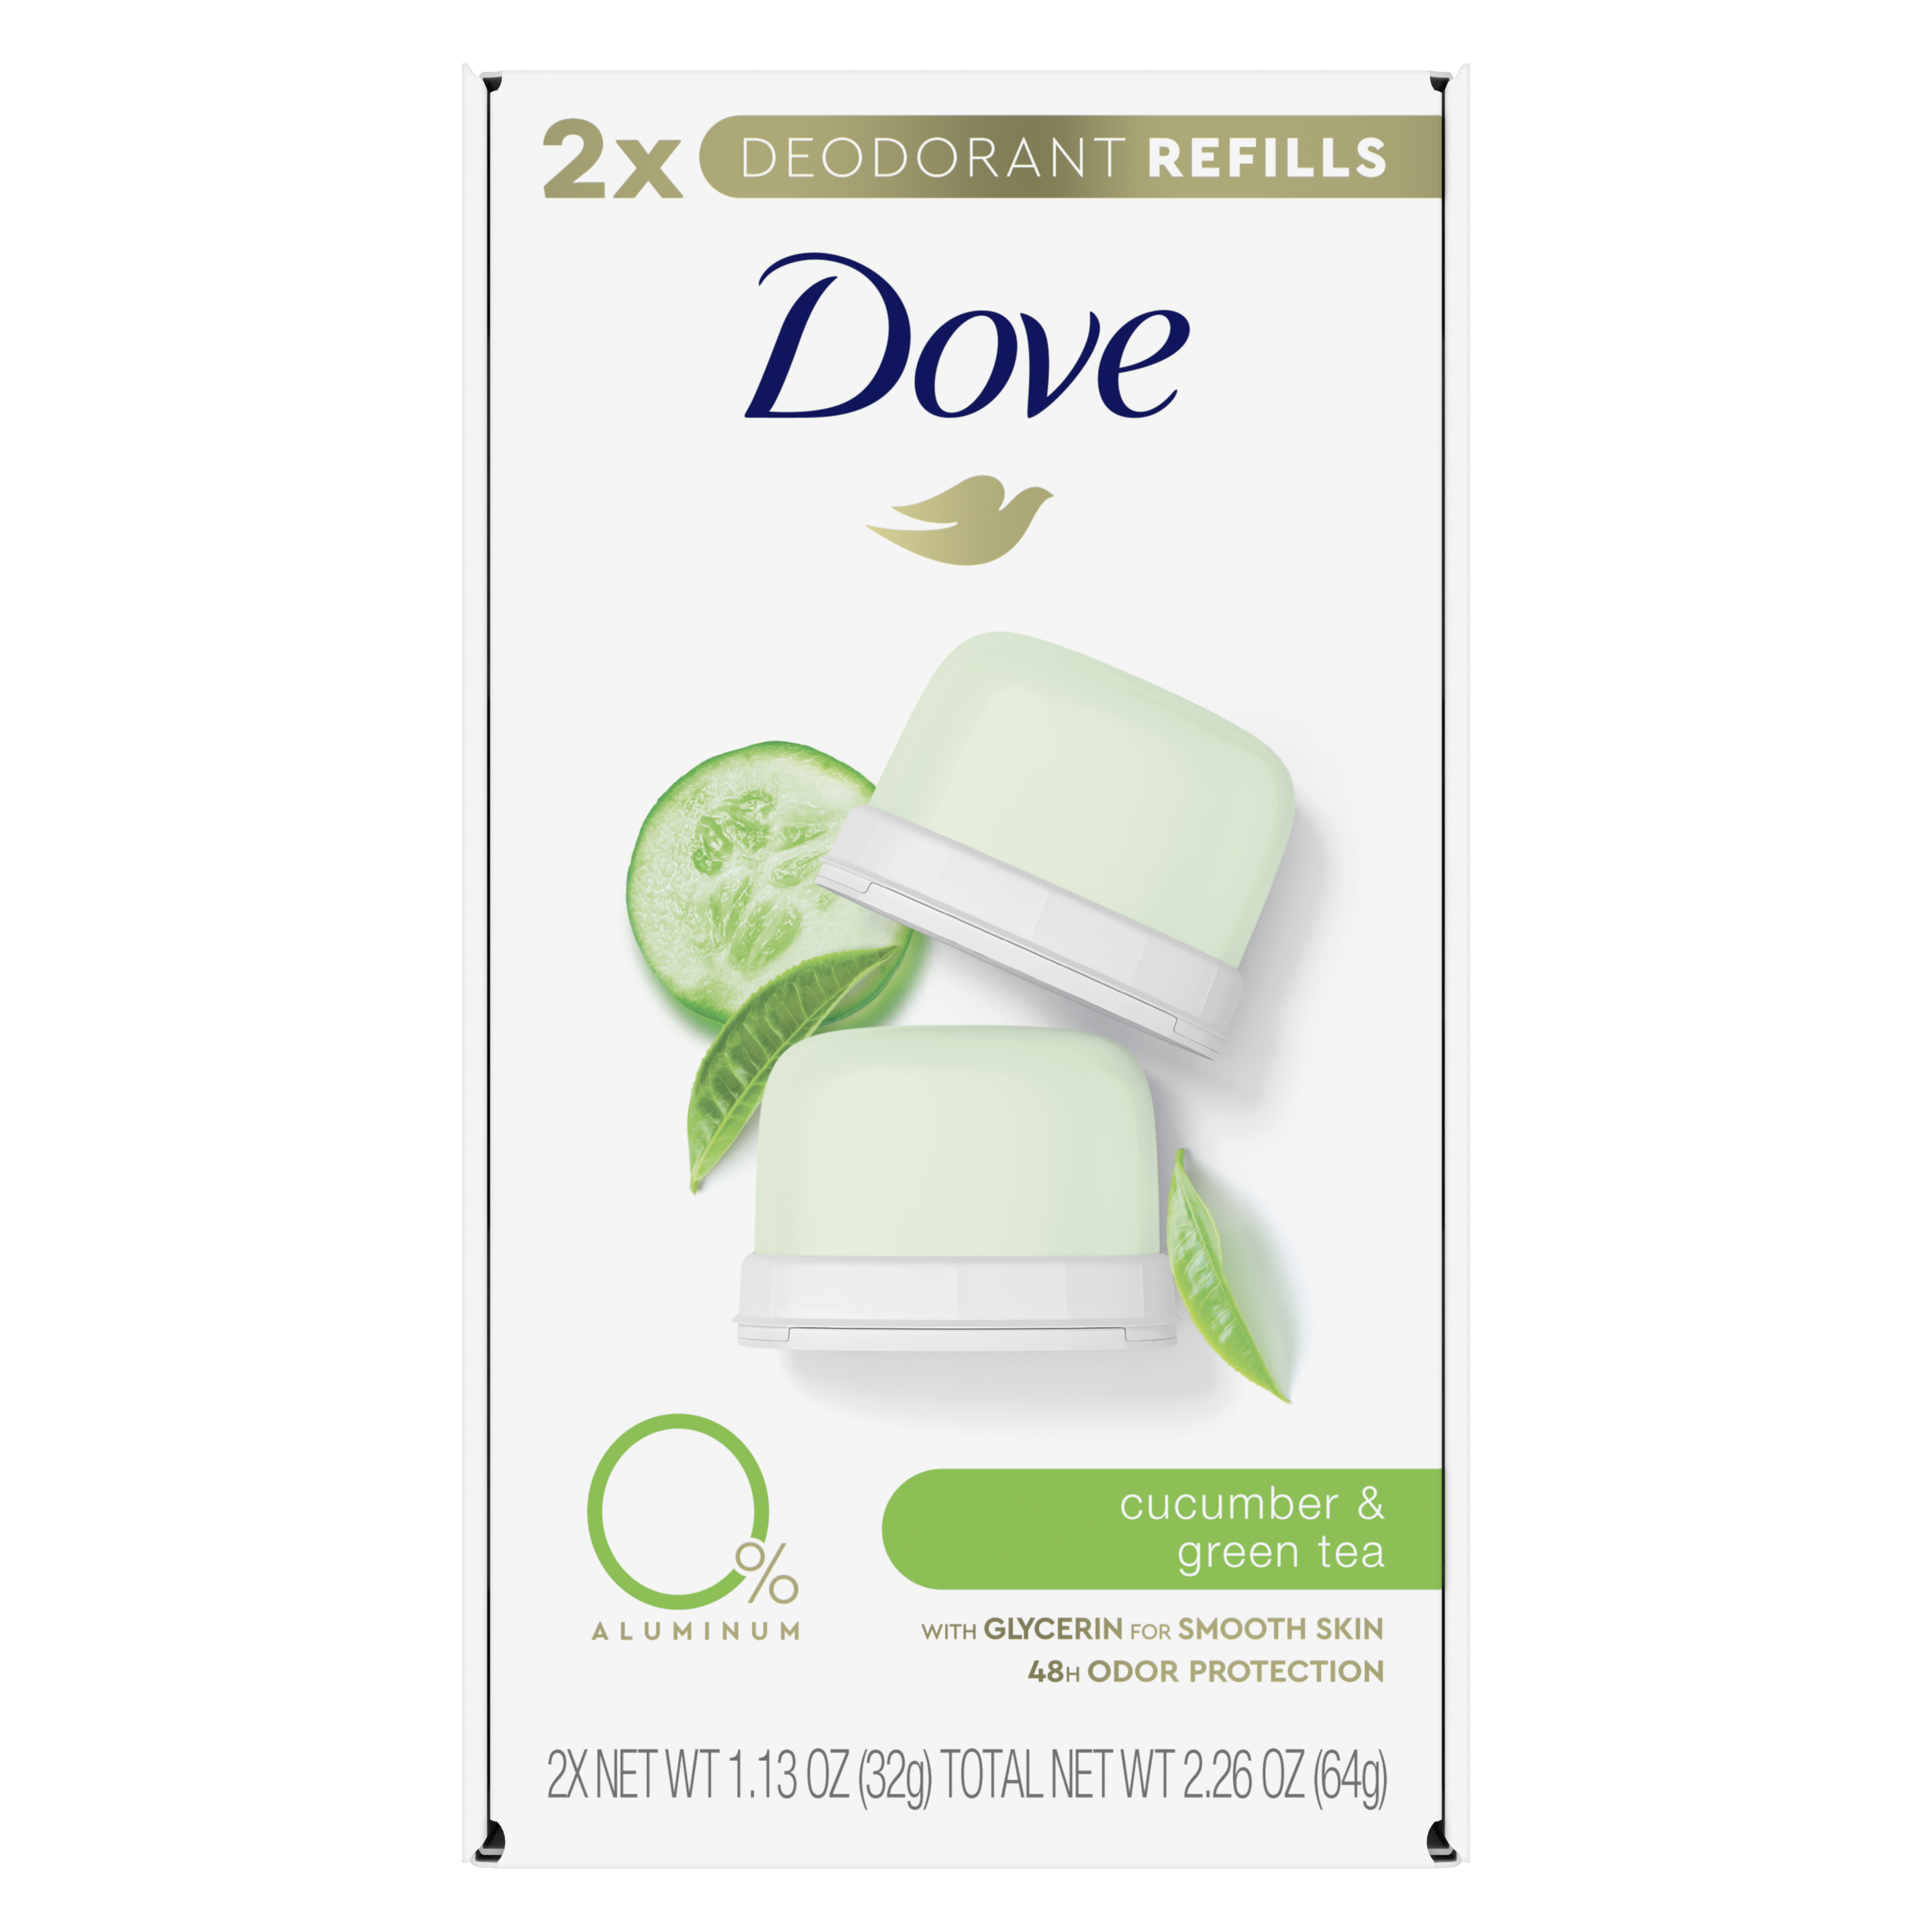 Dove Stick Deodorant Refills 0% Aluminum Cucumber & Green Tea Refill Kit